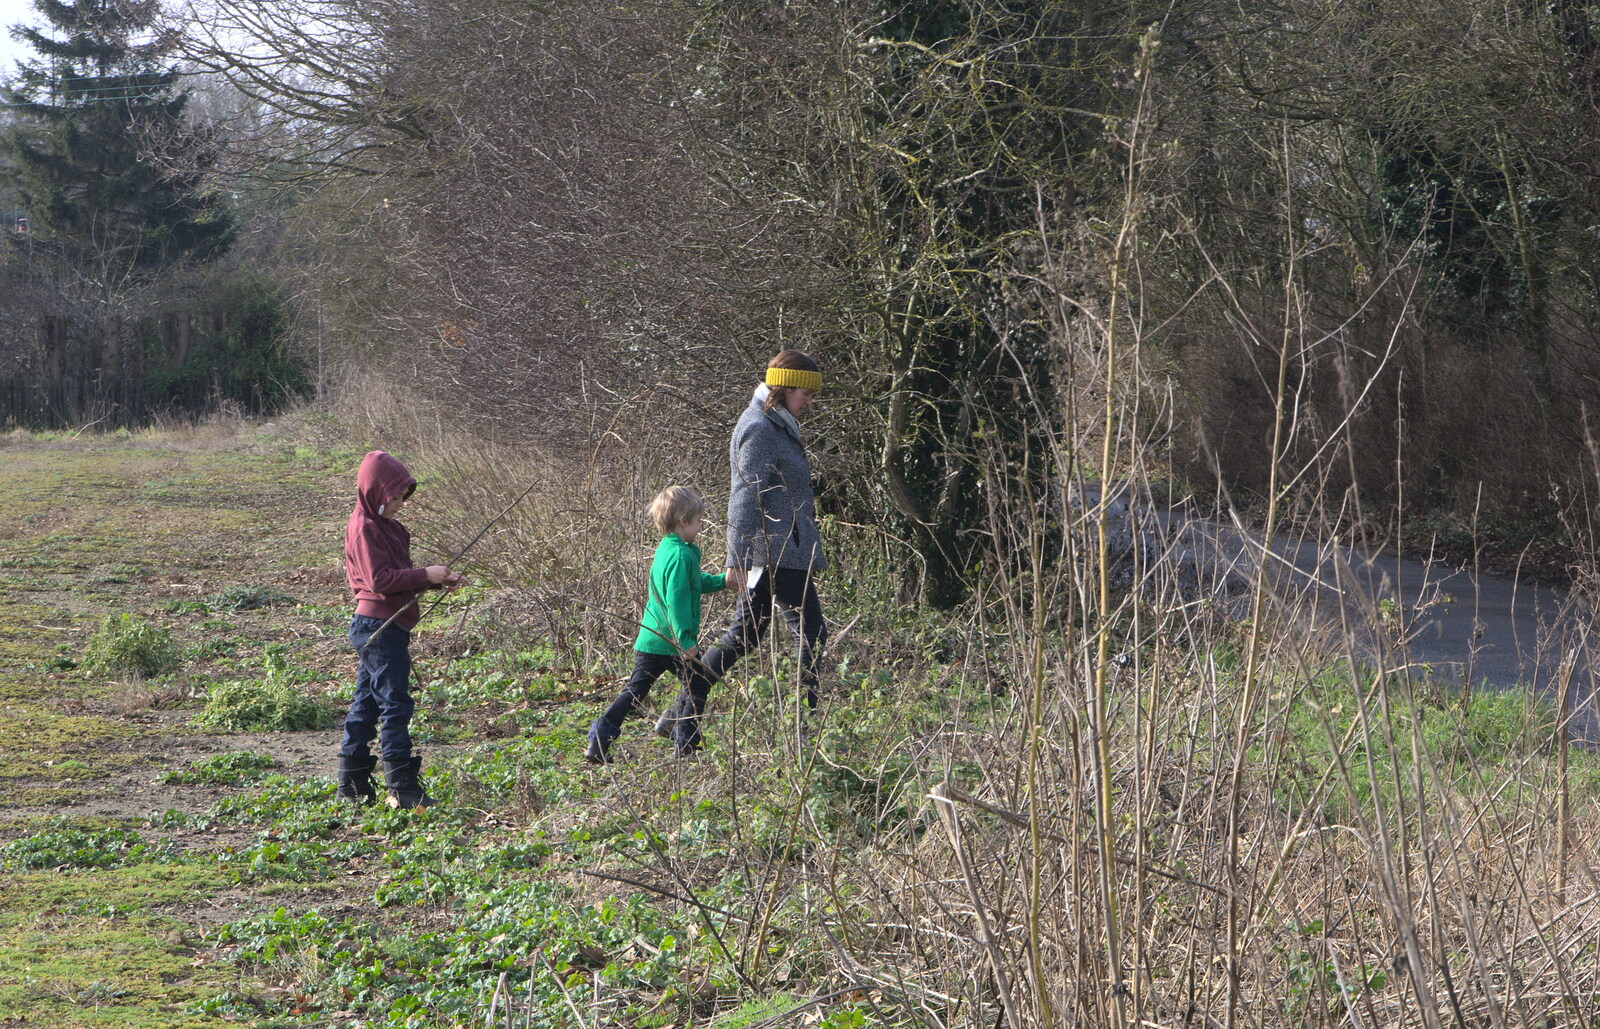 We head off across the fields from A Winter's Walk, Thrandeston, Suffolk - 5th February 2017